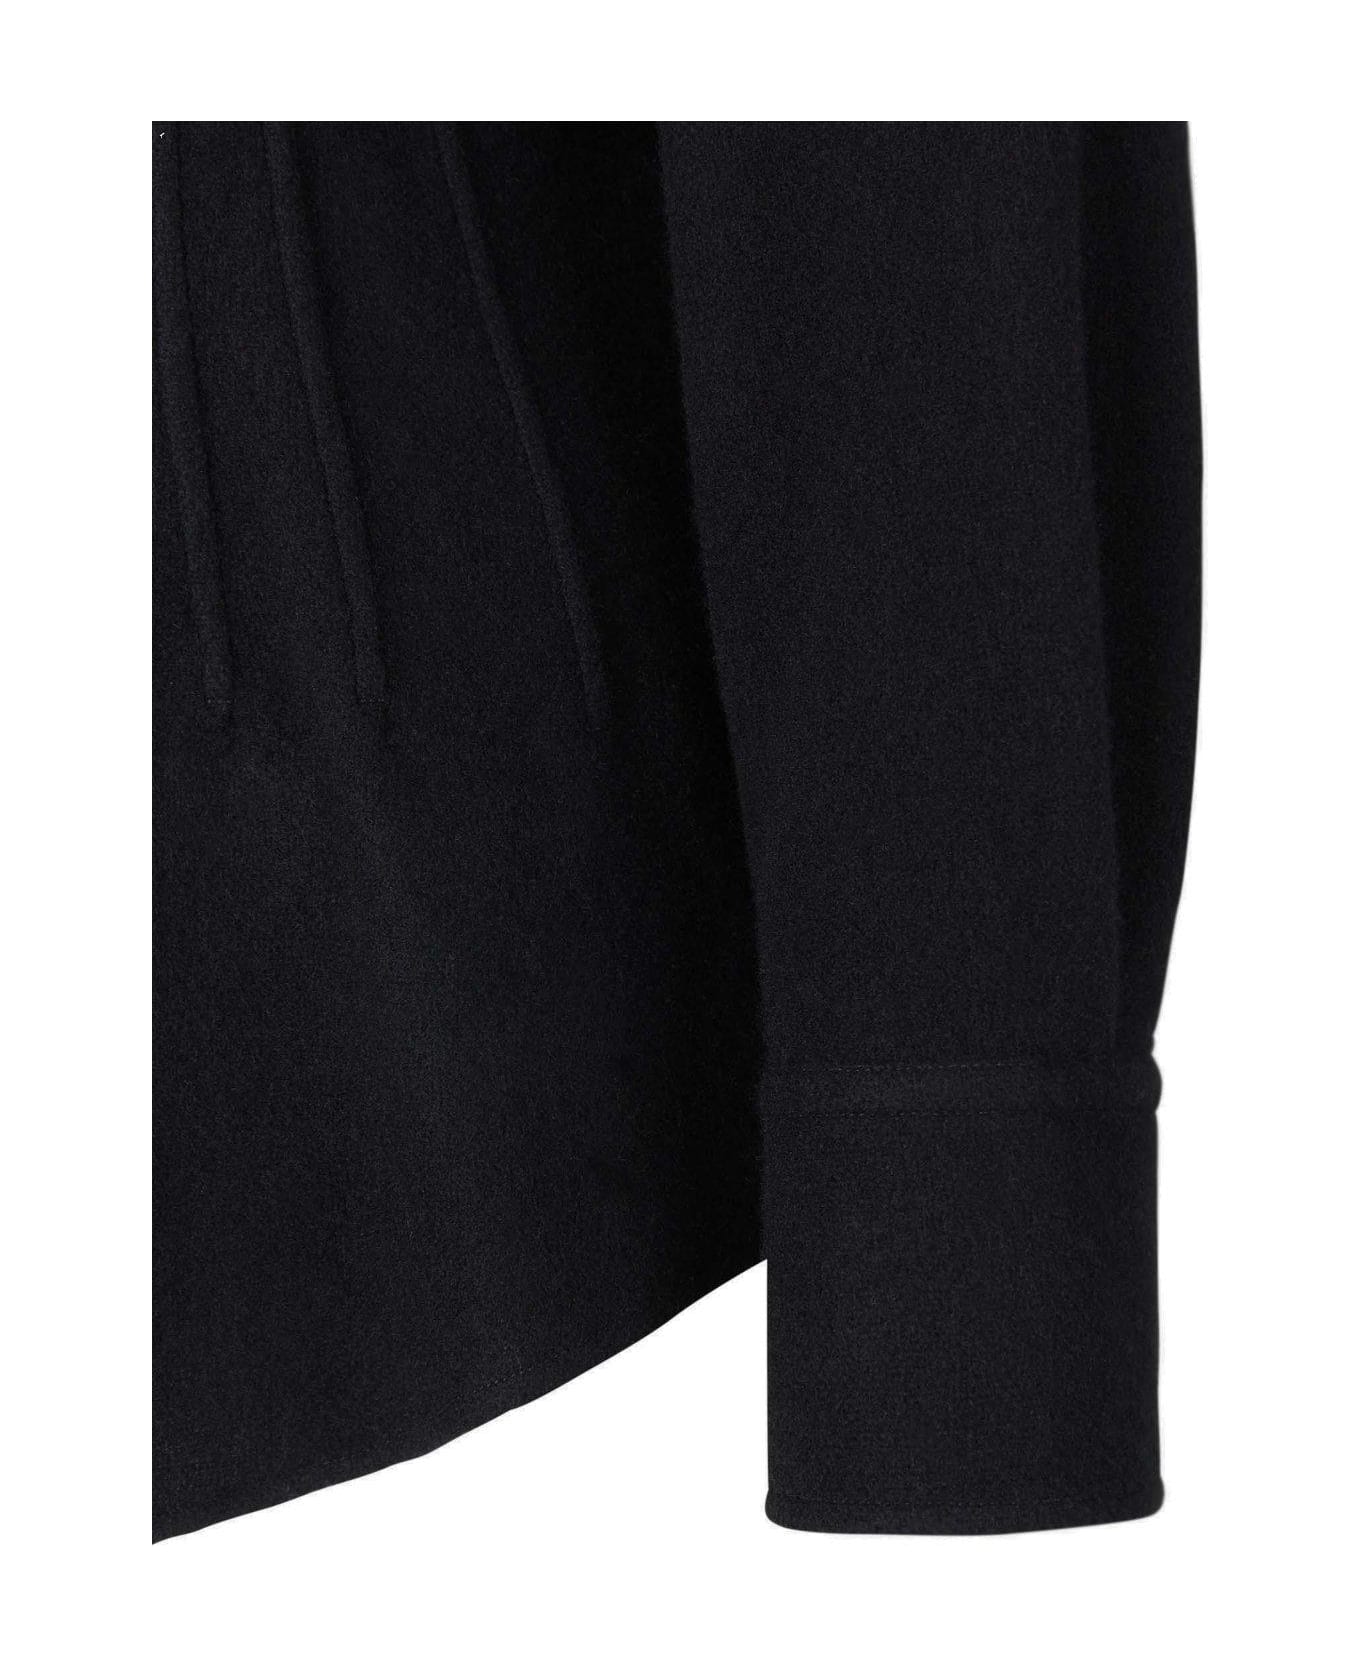 Chloé Corset-detailed Shirt - Black ブラウス